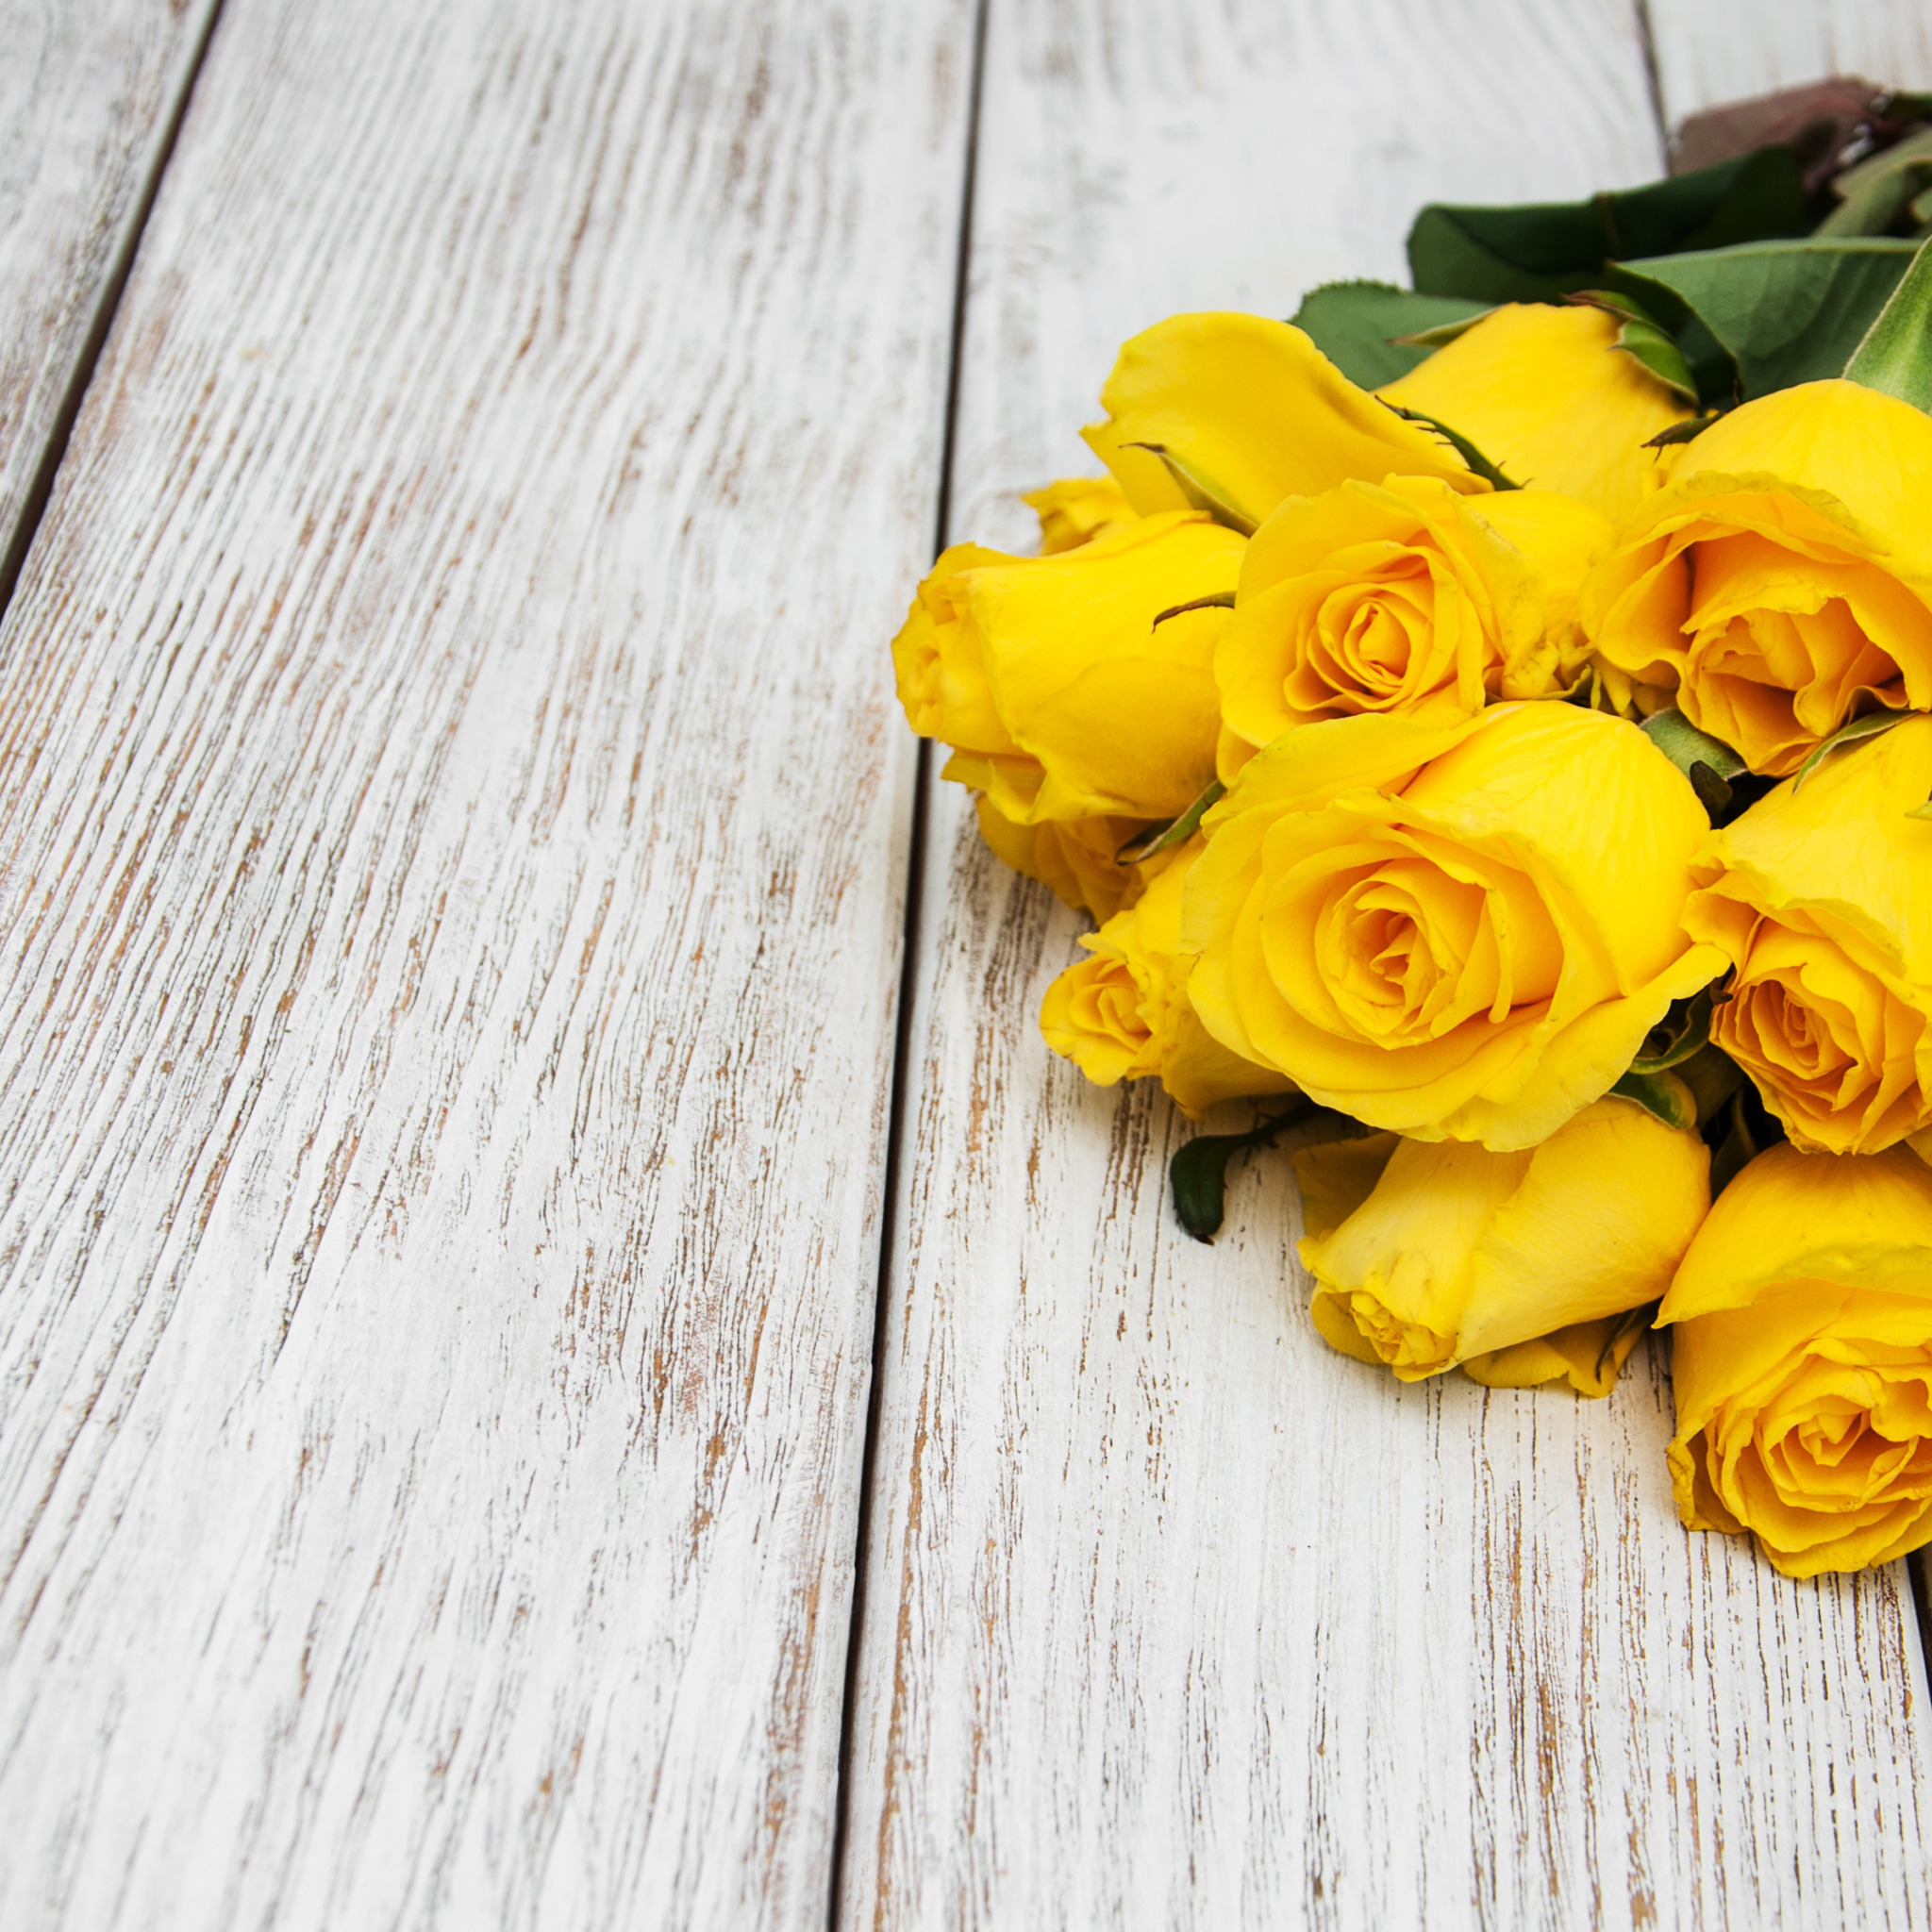 Покрывало желтые цветы. Желтые цветы на столе. Желтые розы на столе. Желтые розы для мамы. Красивые желтые цветы на досках.